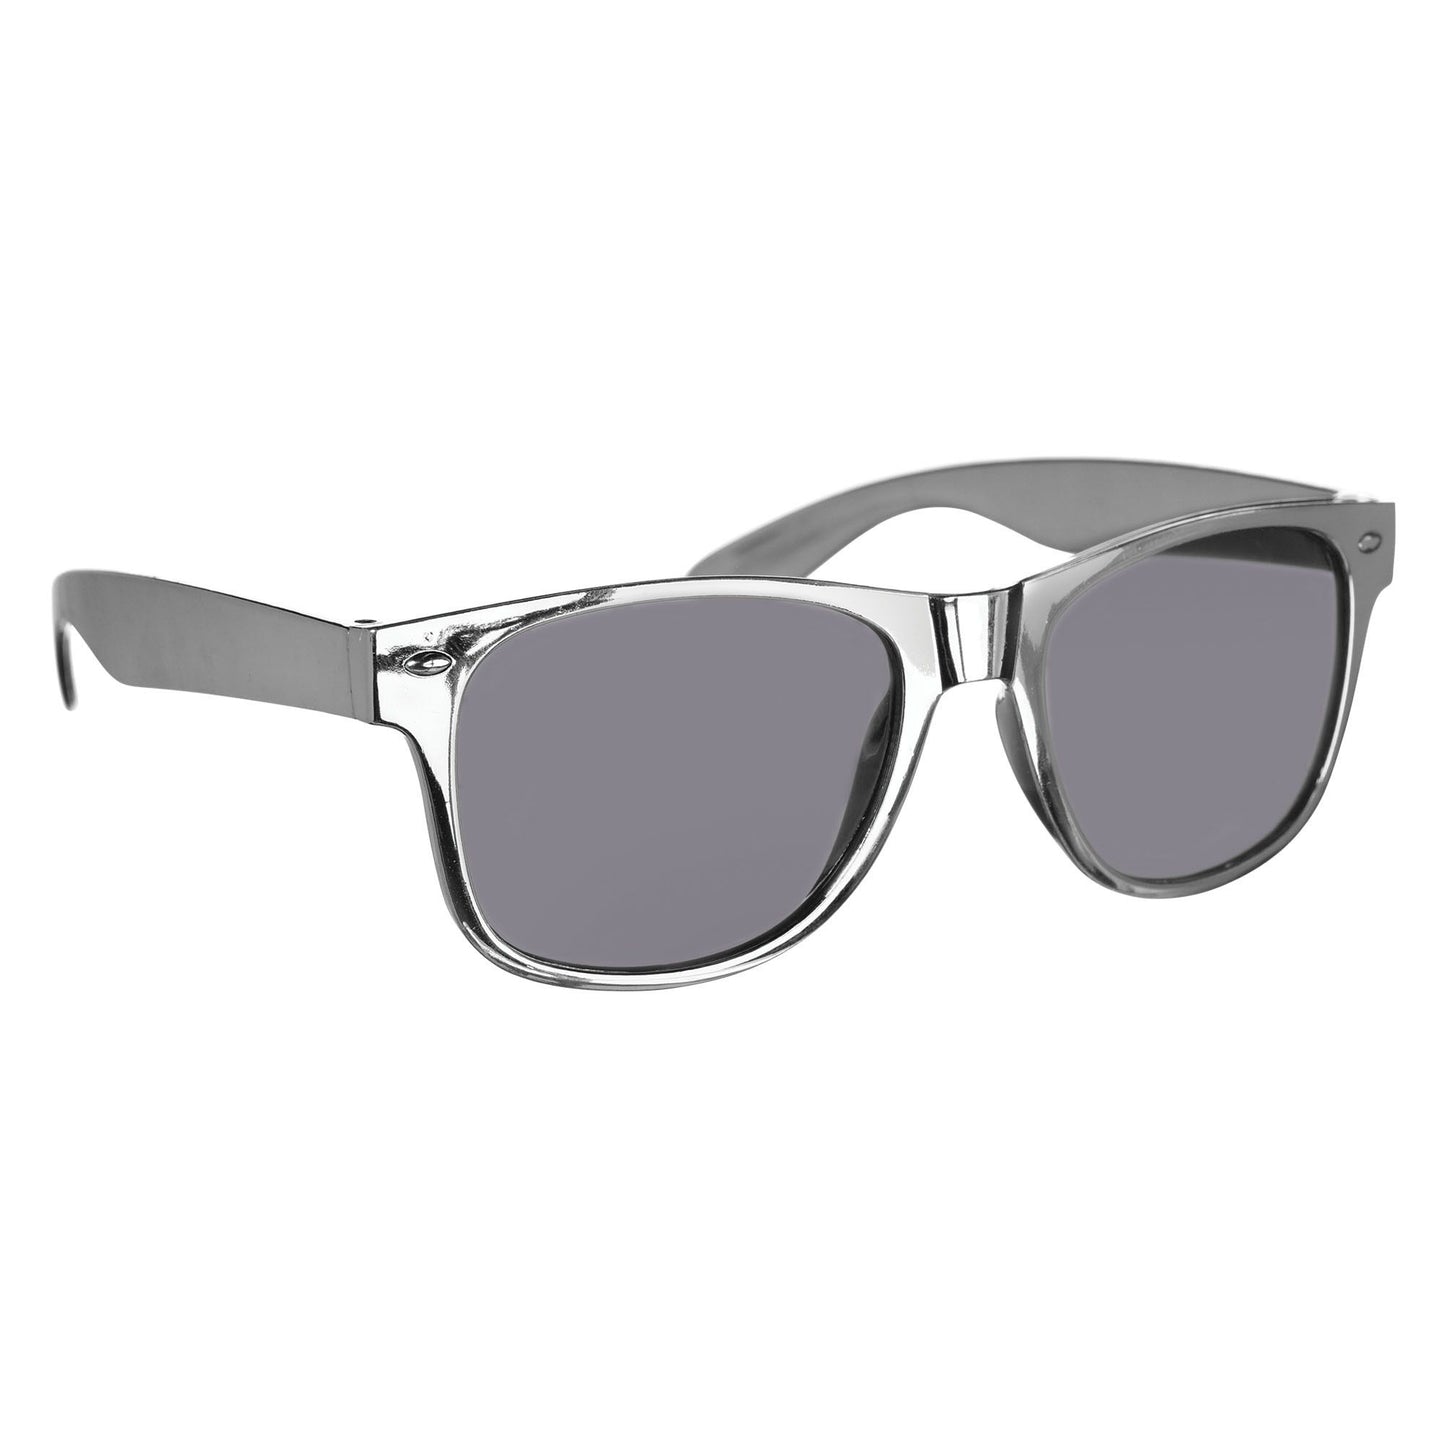 Glasses Darl Lens - Silver